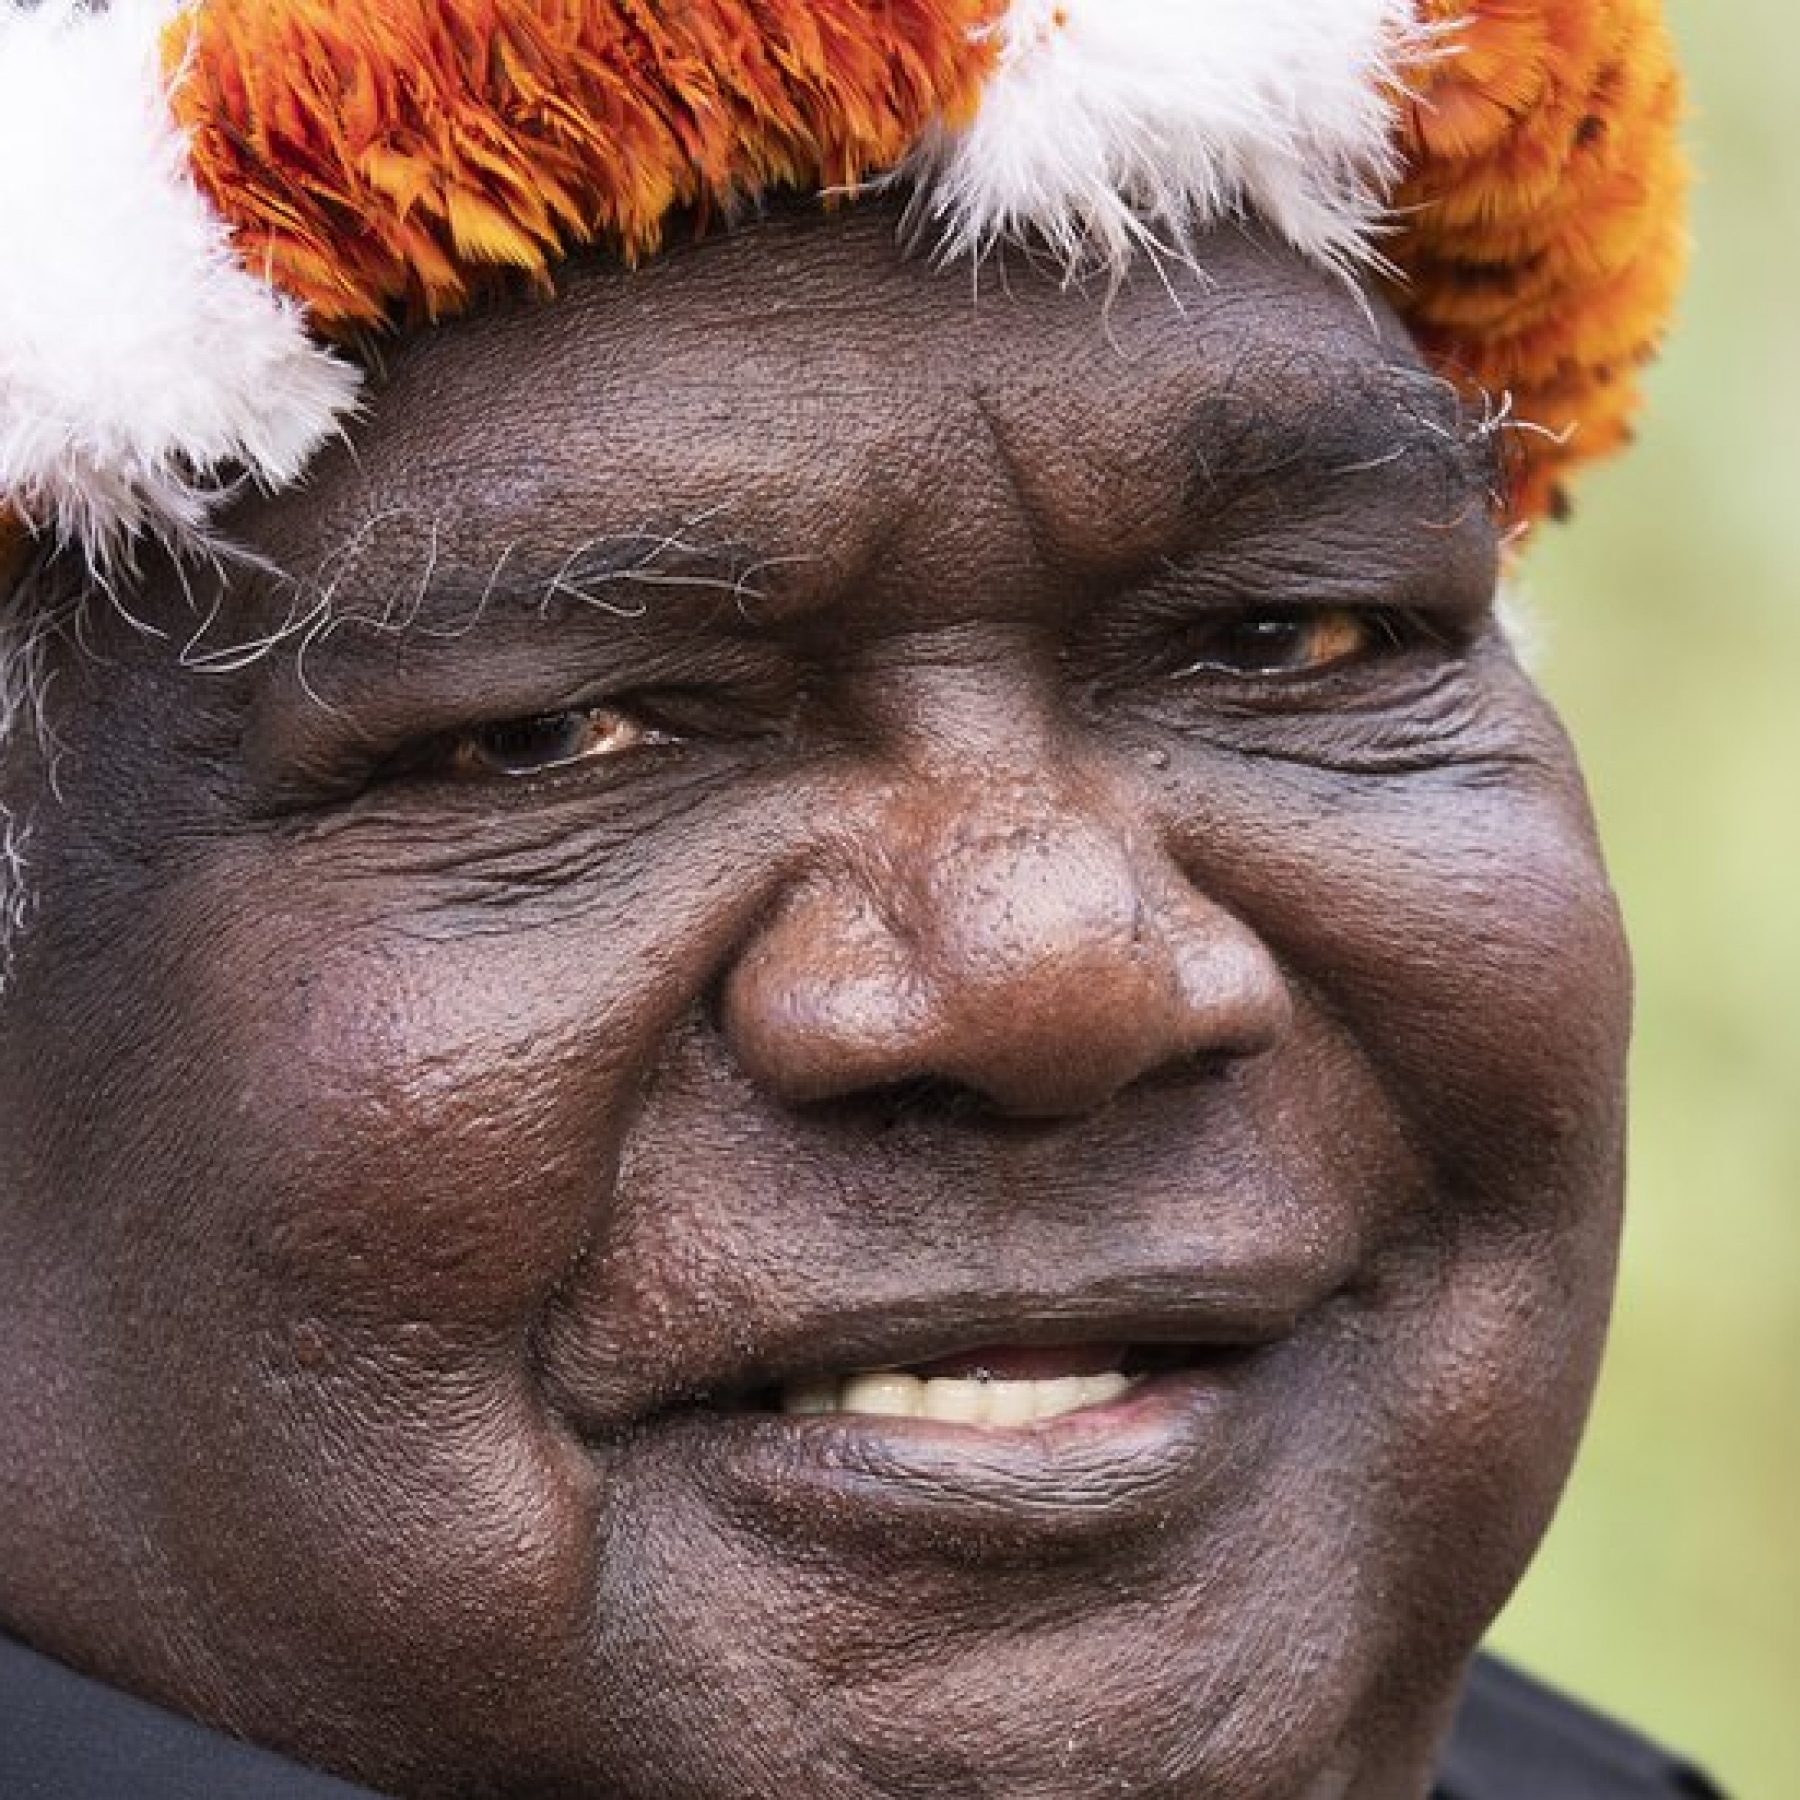 Six historic moments of Aboriginal leader Yunupingu’s life